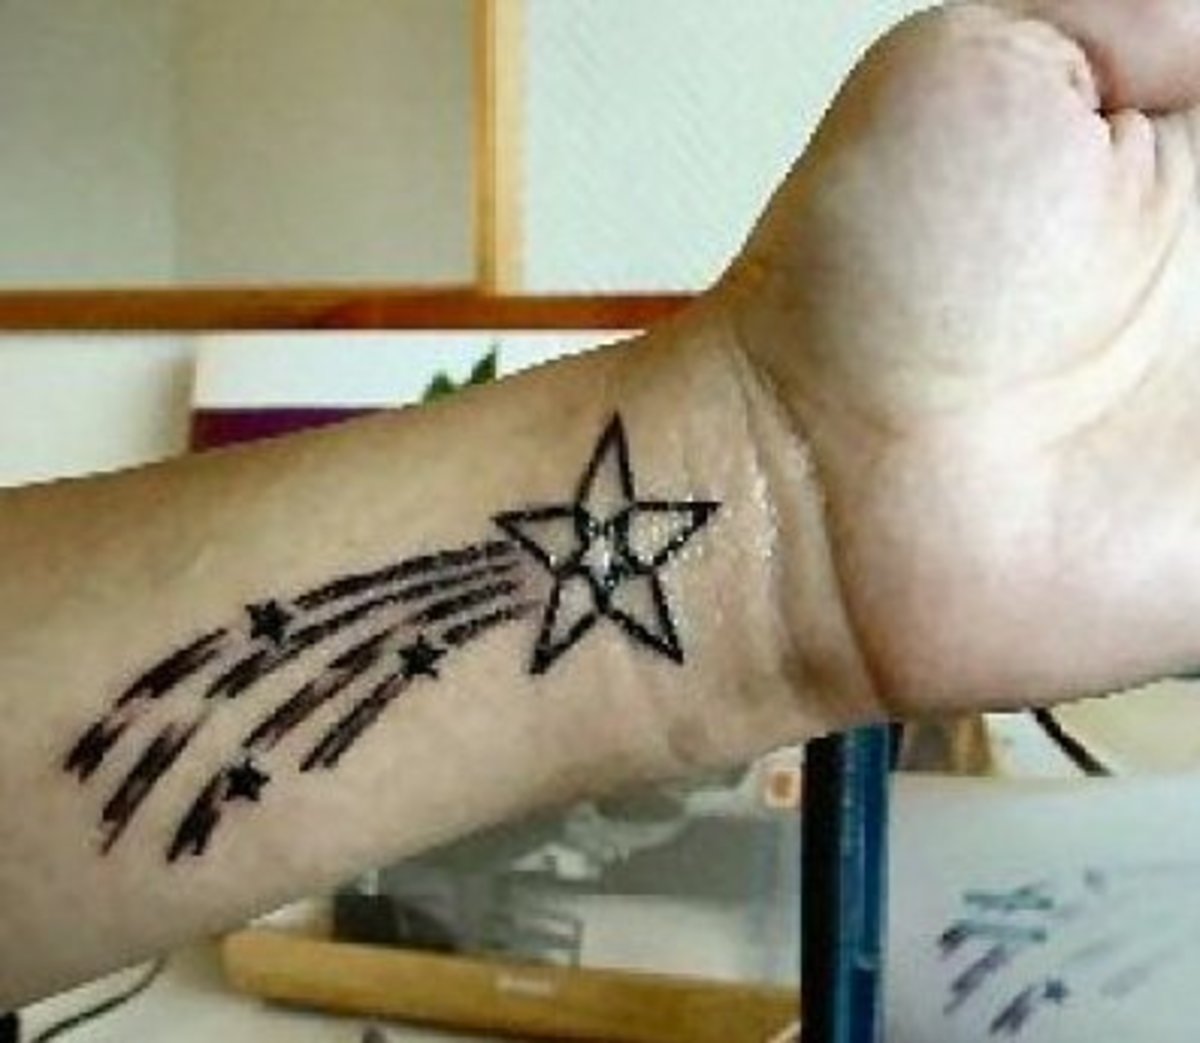 A shooting star tattoo.